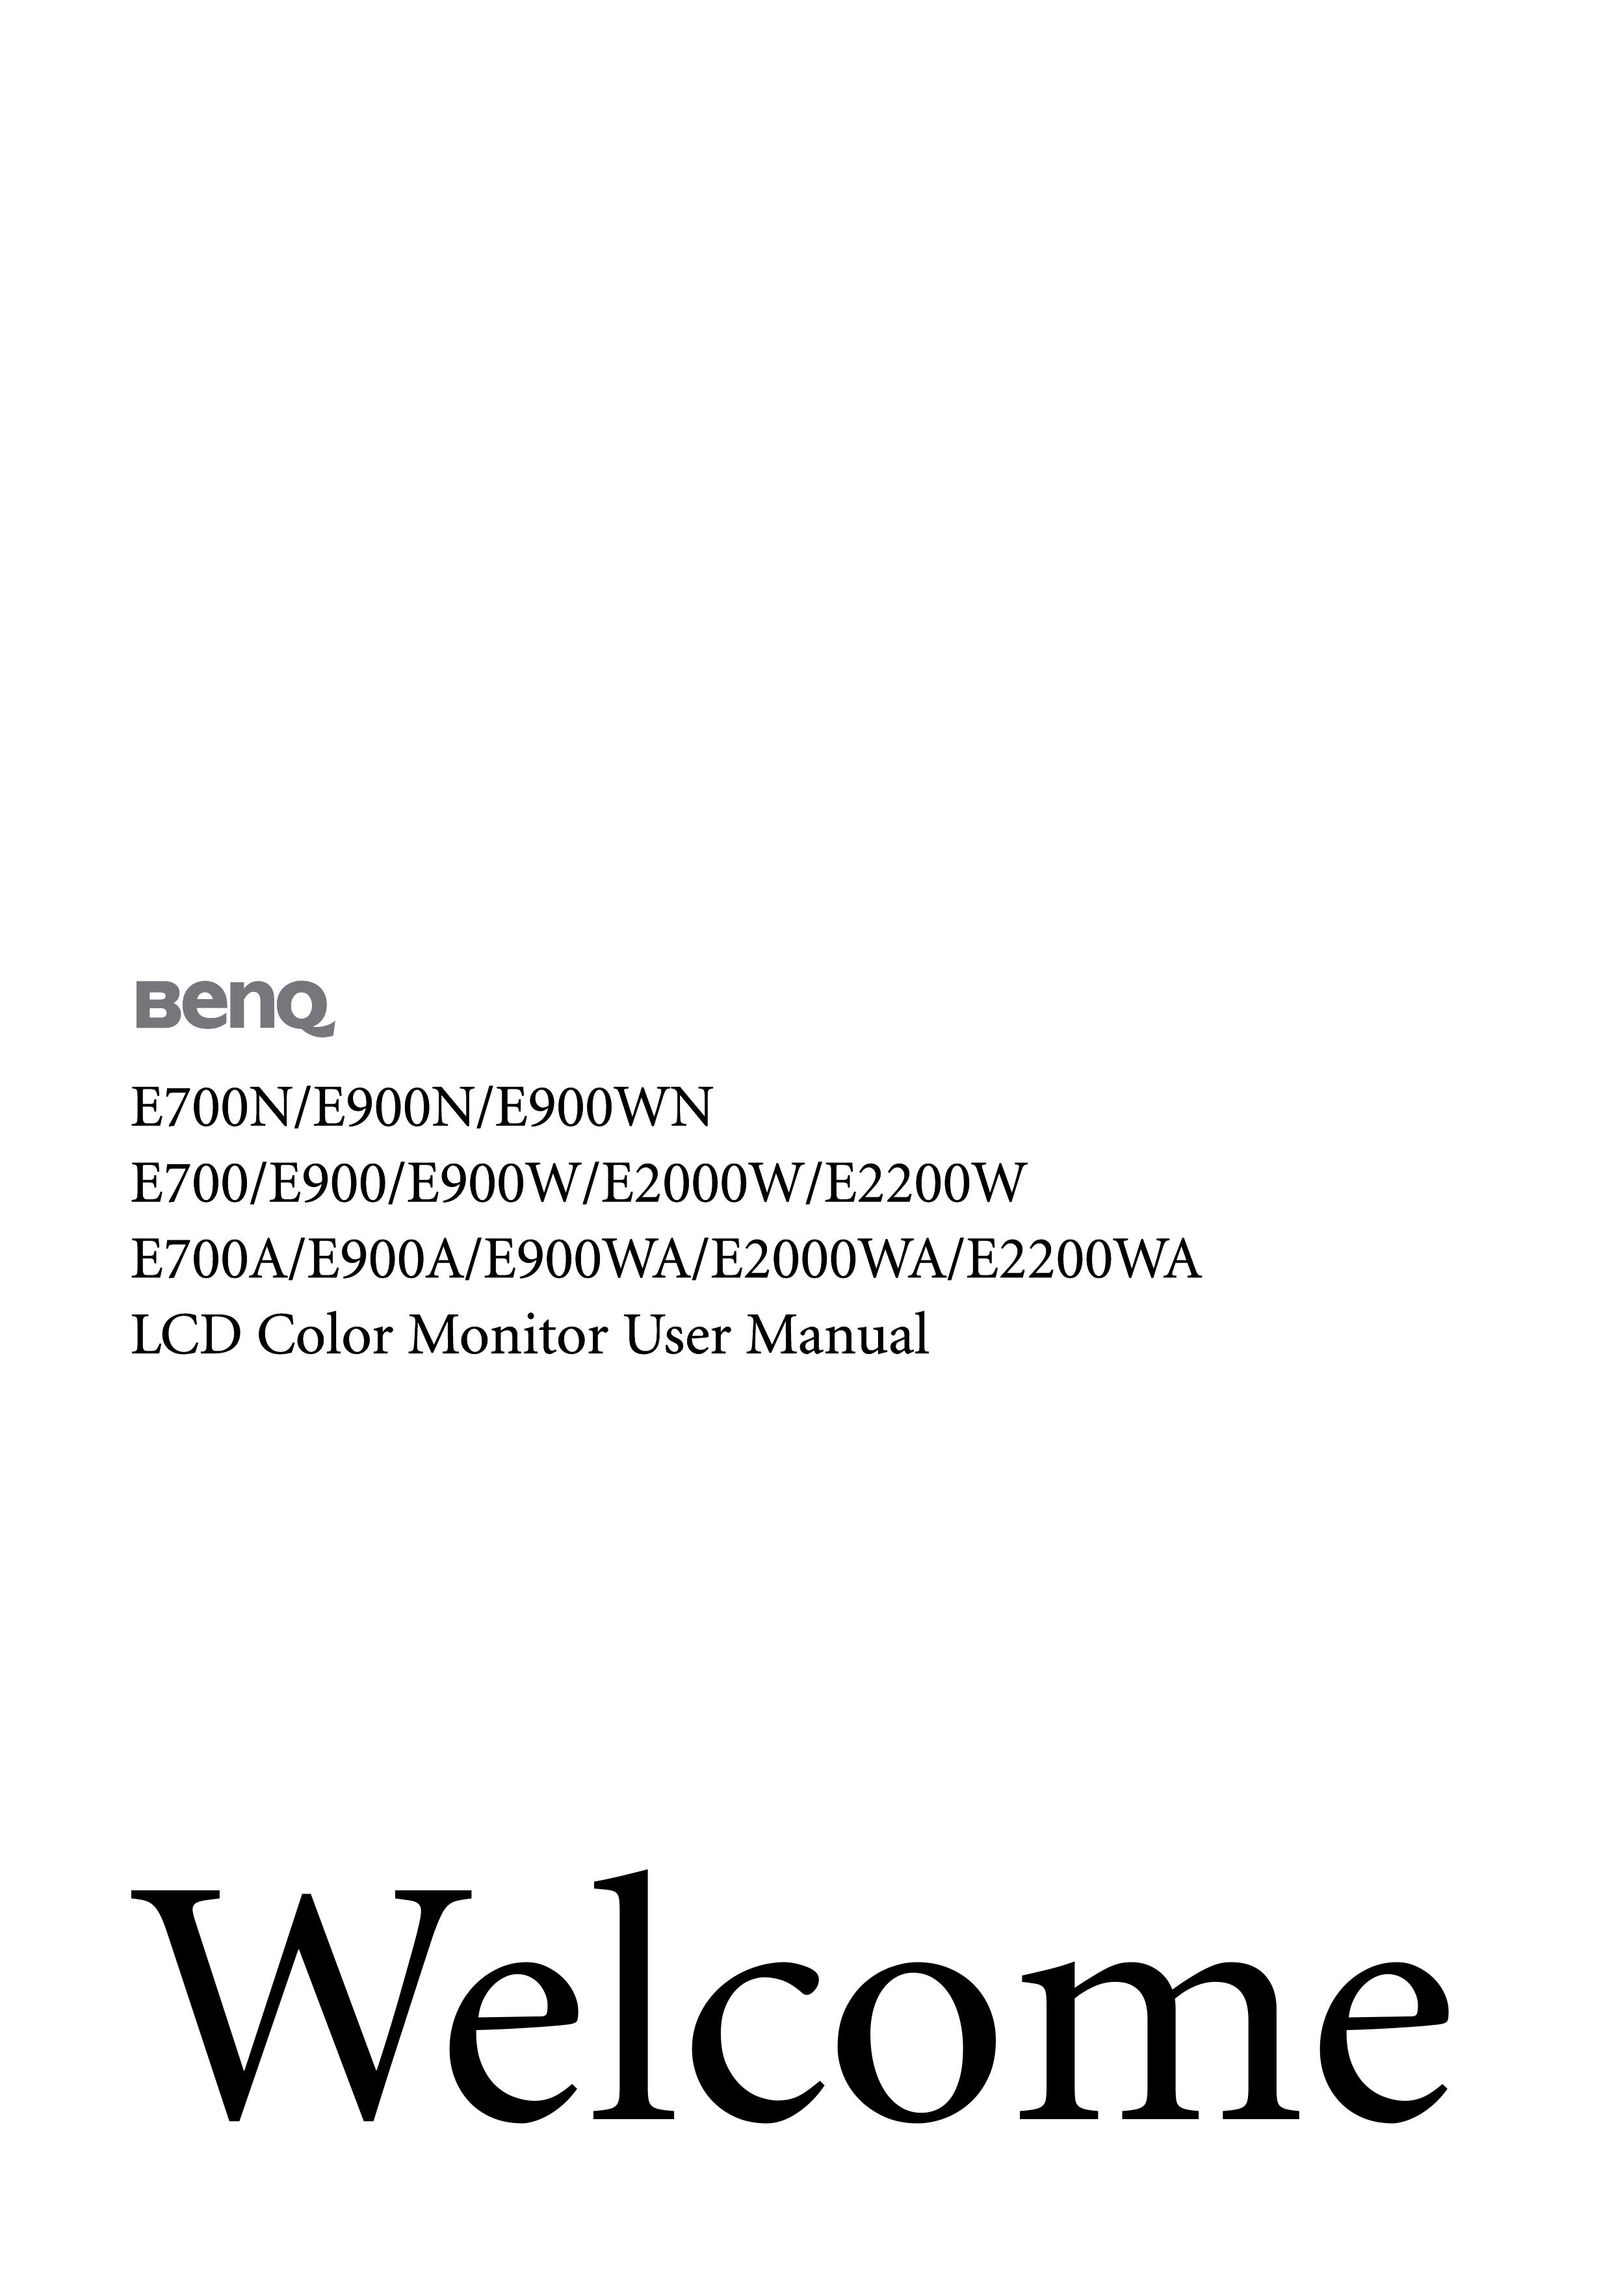 BenQ E900WA Computer Monitor User Manual